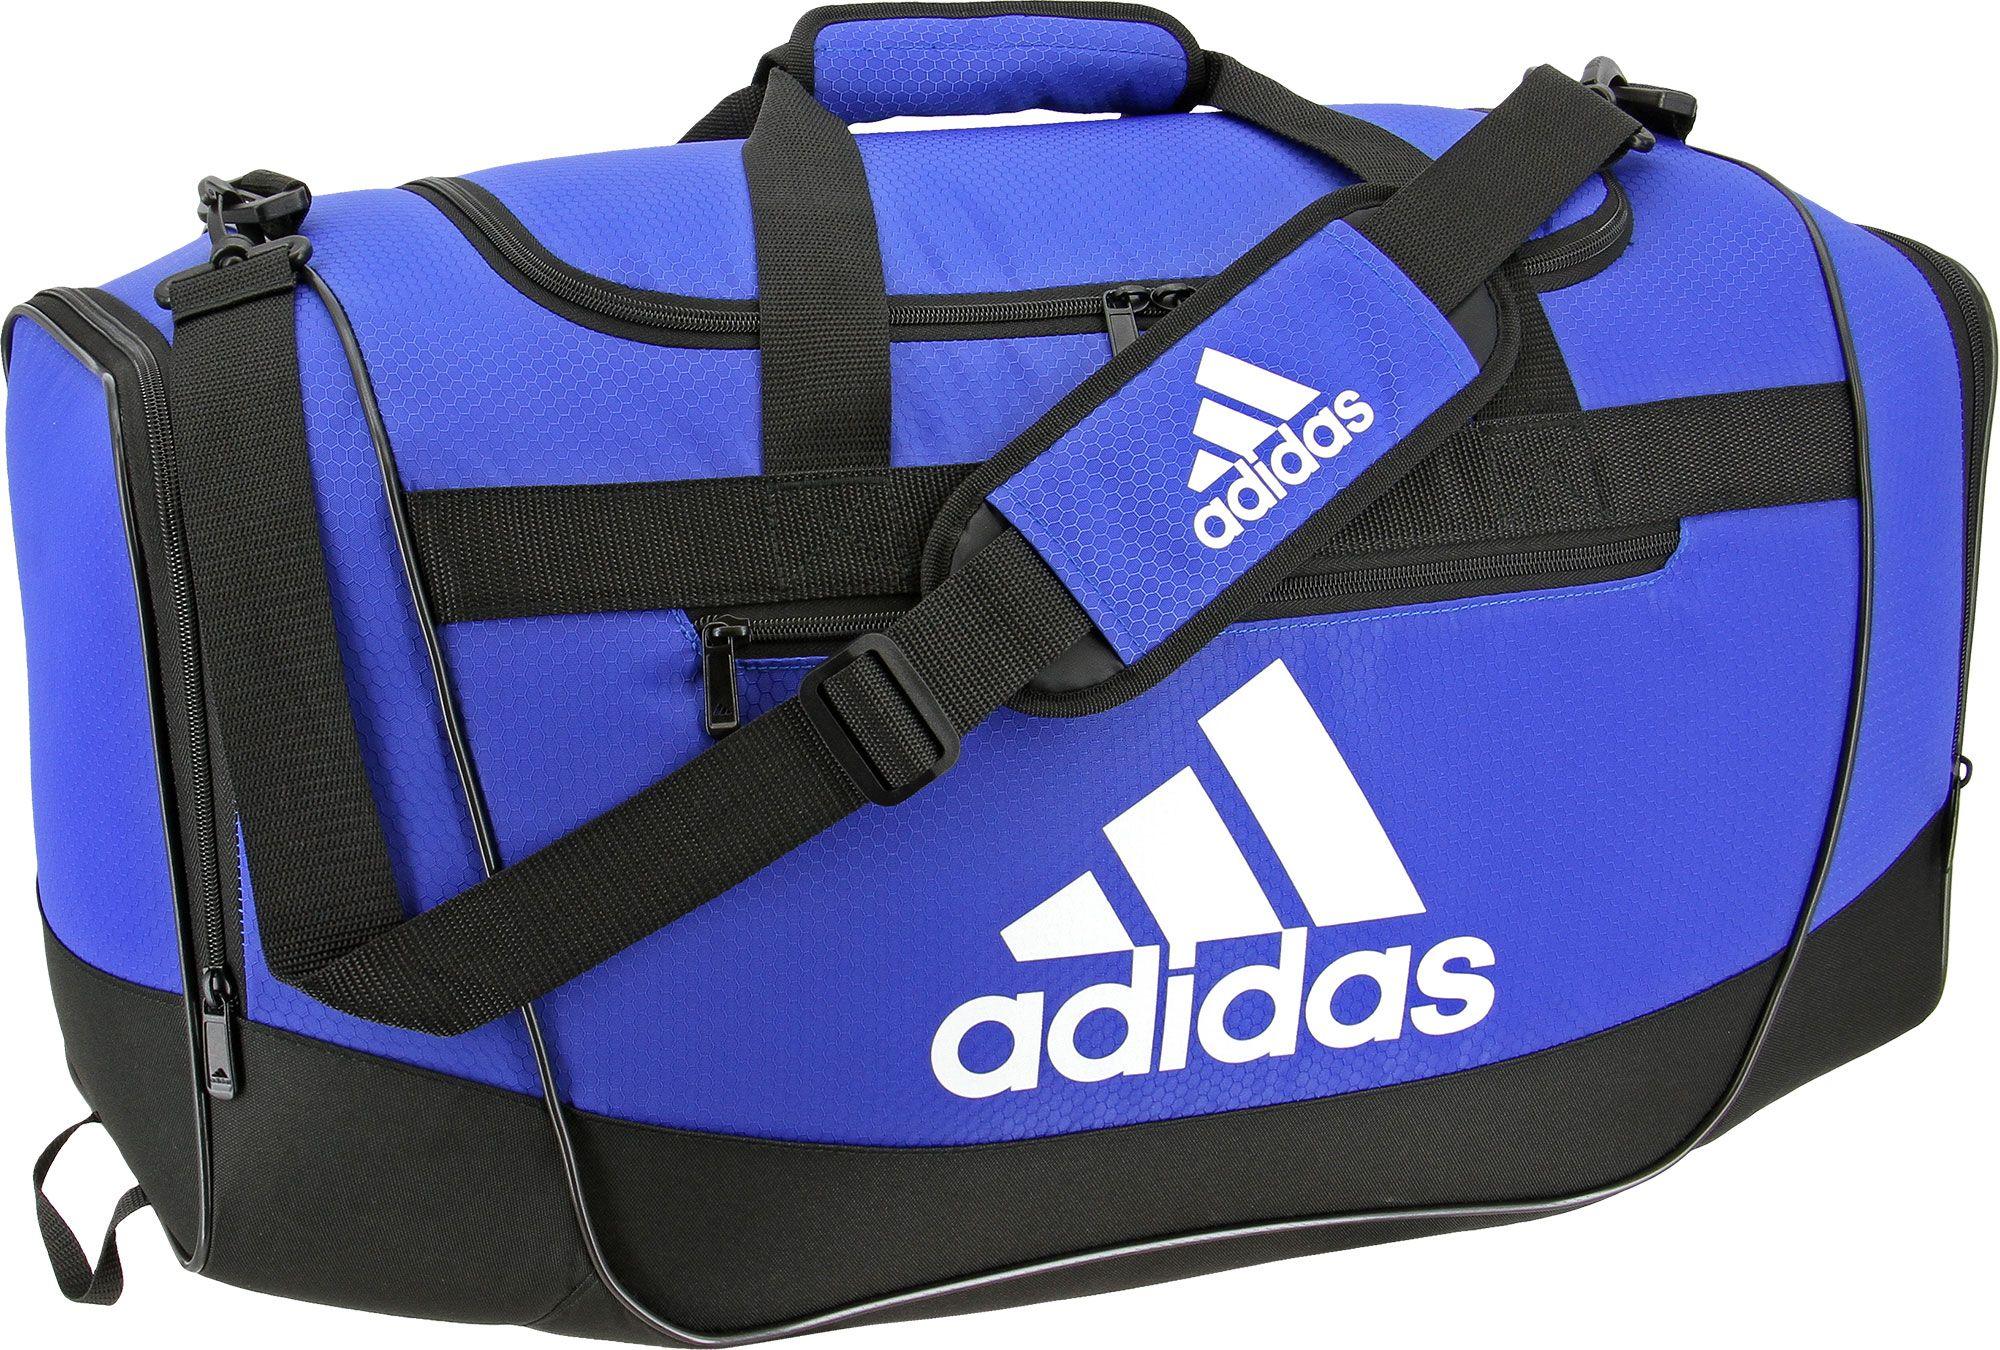 adidas Defender Iii Medium Duffle Bag in Blue for Men - Lyst